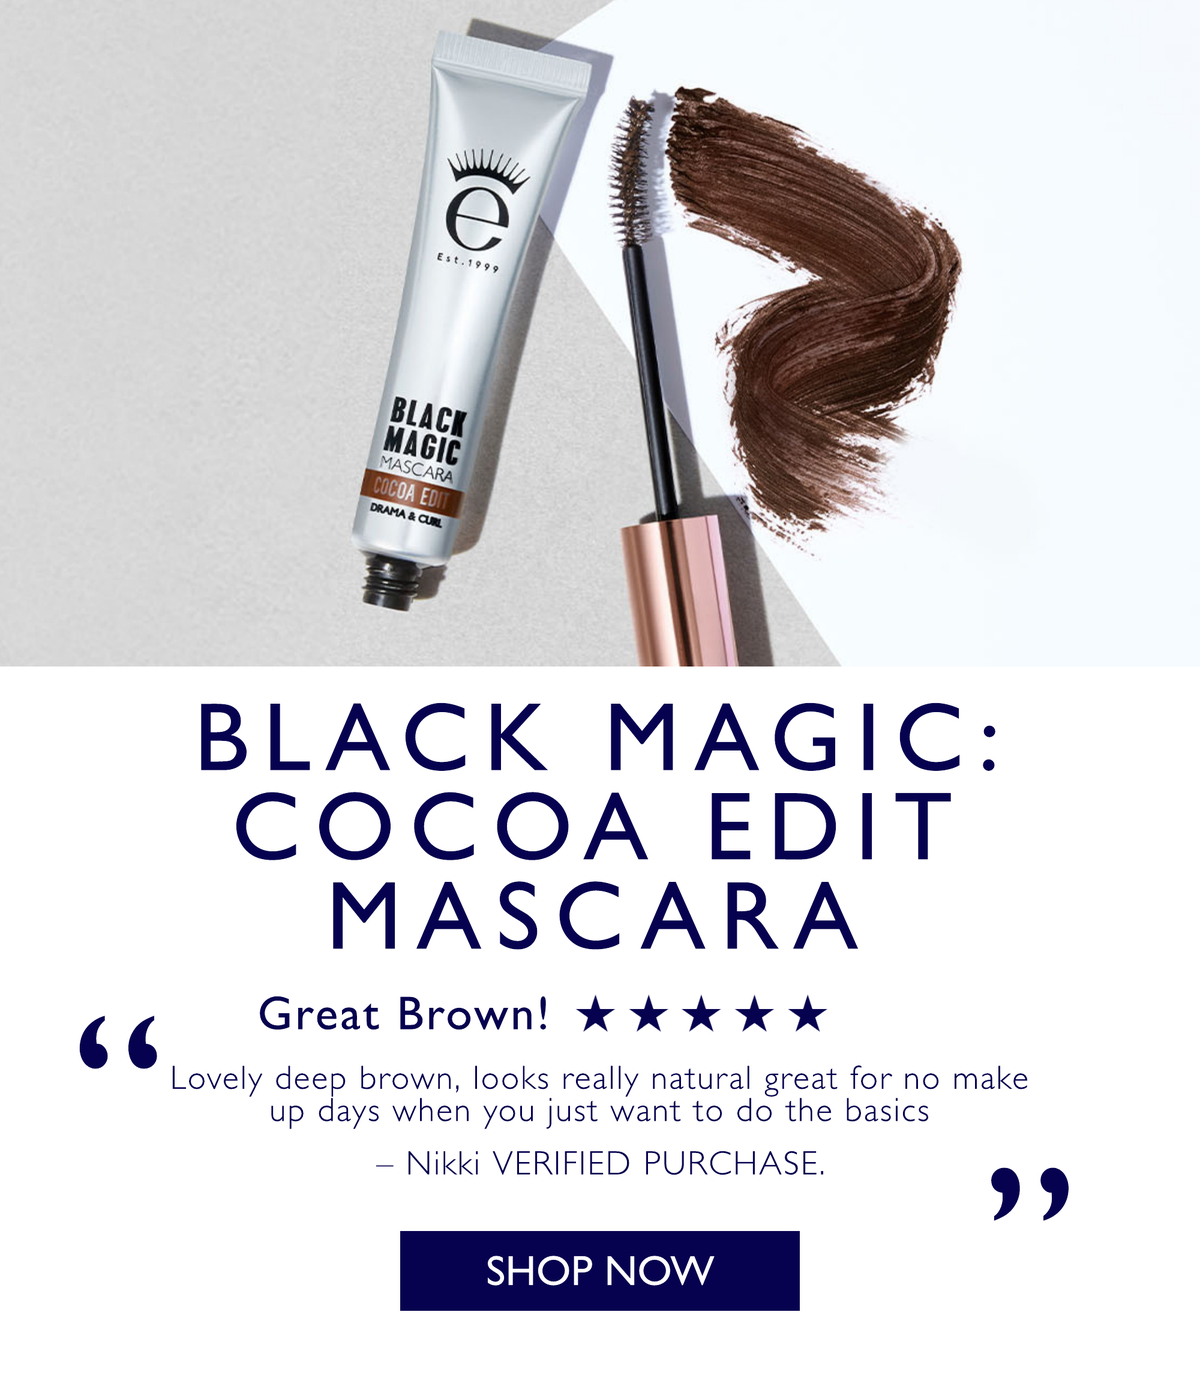 Black Magic Cocoa Edit Mascara - great colour. Click to shop now